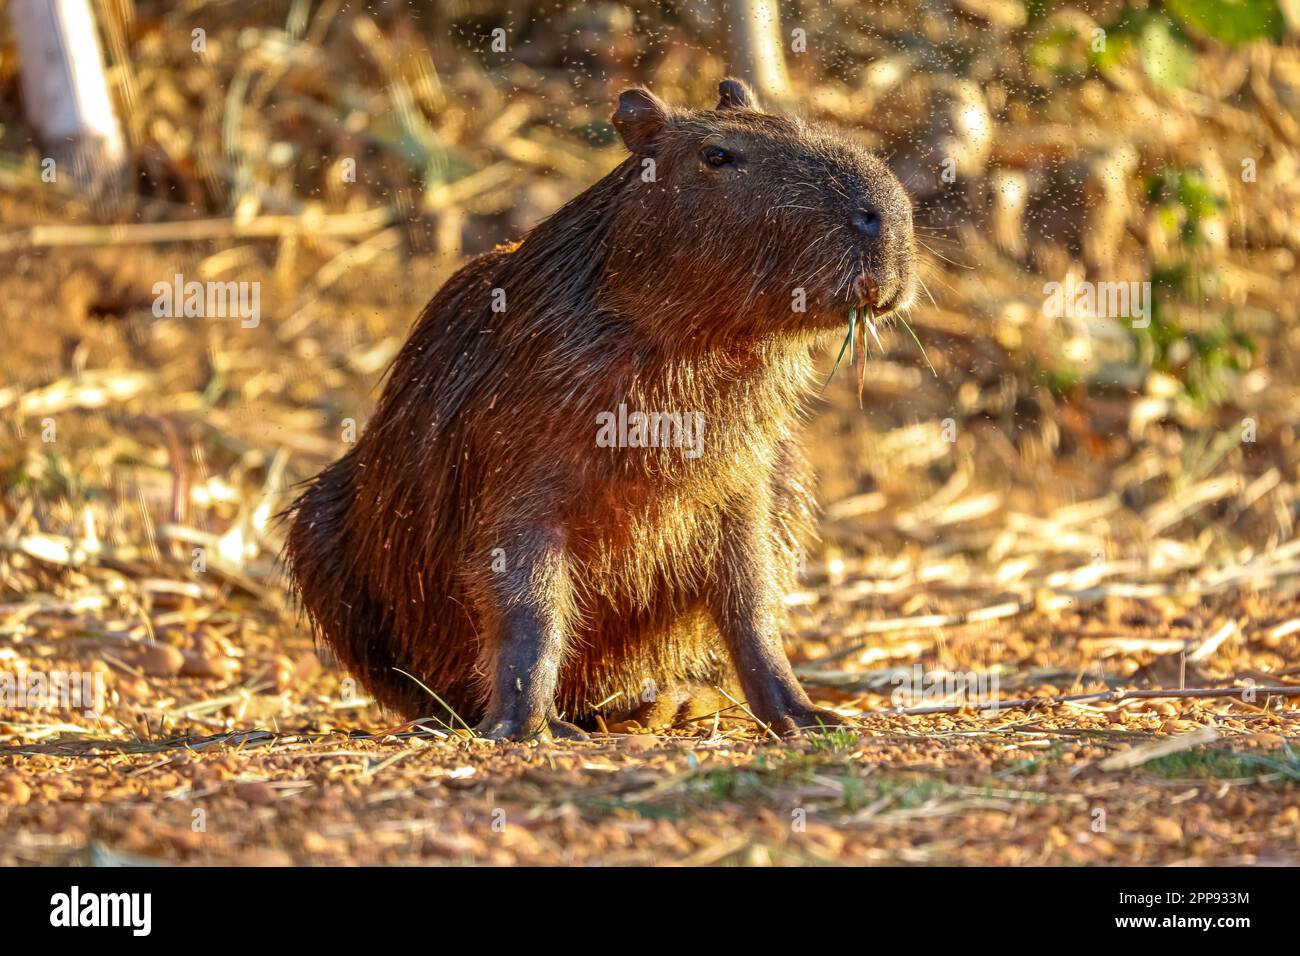 Carino capybara seduto a terra in calda luce del sole, guardando a destra, sullo sfondo naturale, San Jose do Rio Claro, Mato Grosso, Brasile Foto Stock